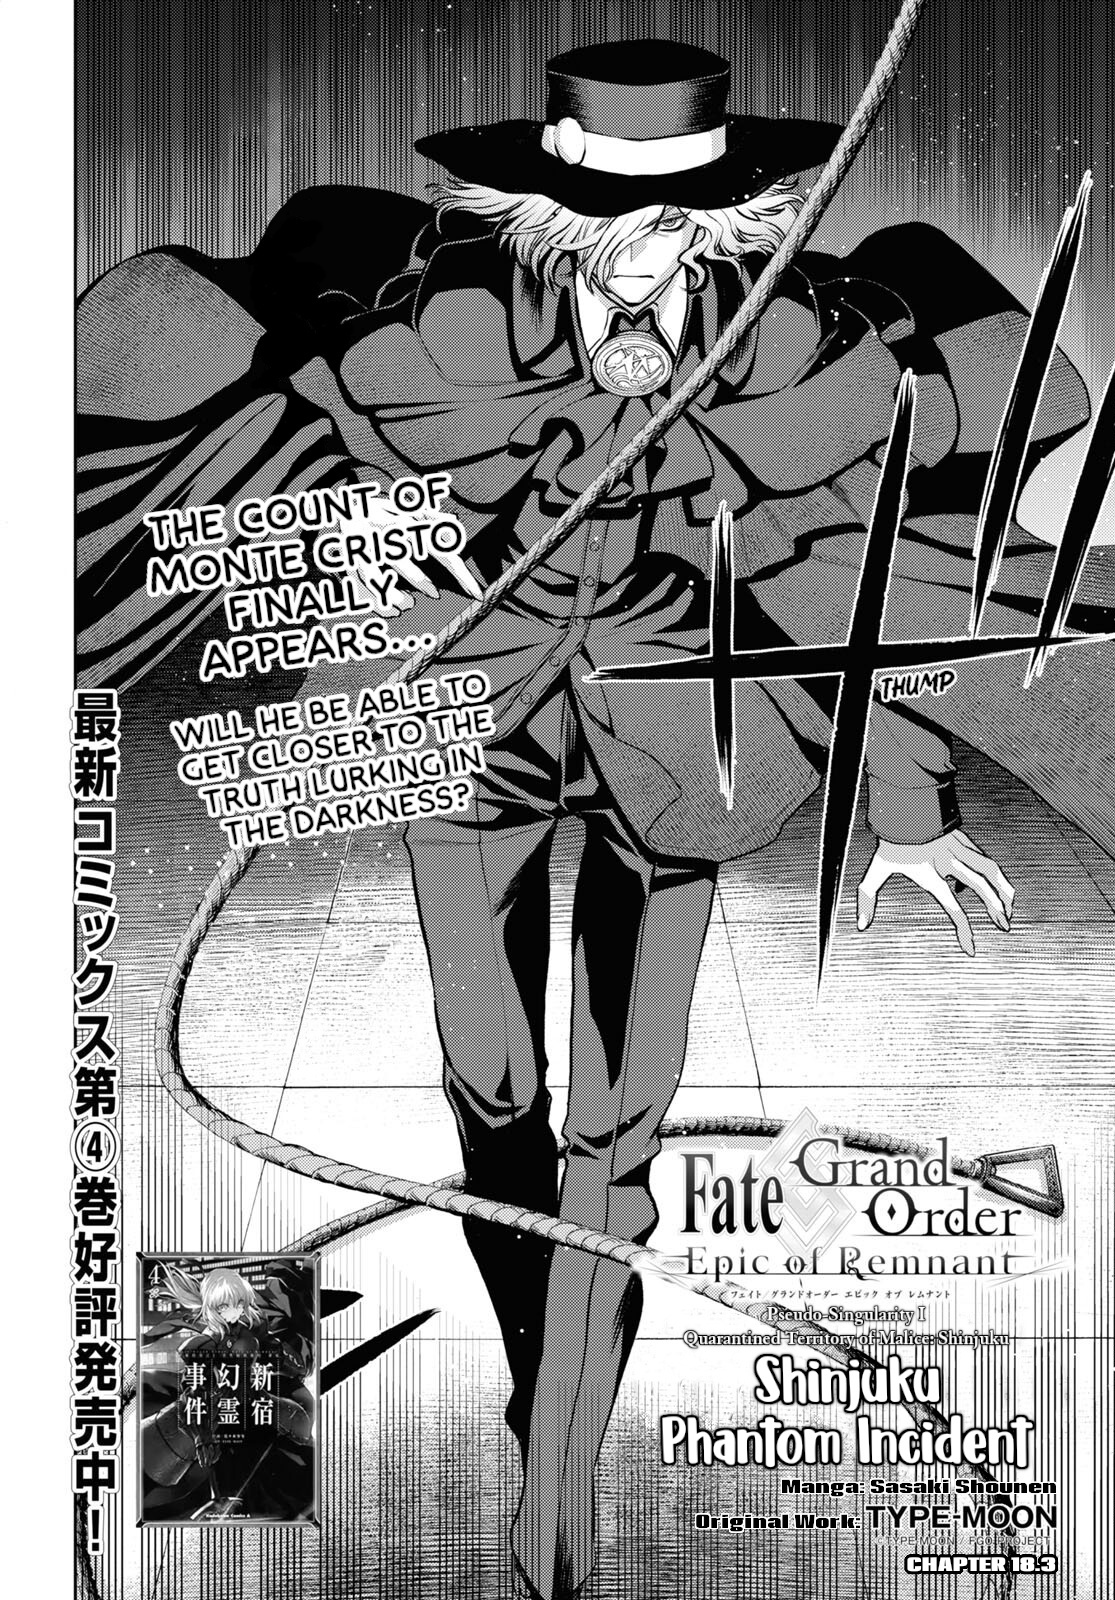 Fate/grand Order: Epic Of Remnant - Pseudo-Singularity I: Quarantined Territory Of Malice, Shinjuku - Shinjuku Phantom Incident - chapter 18.3 - #4